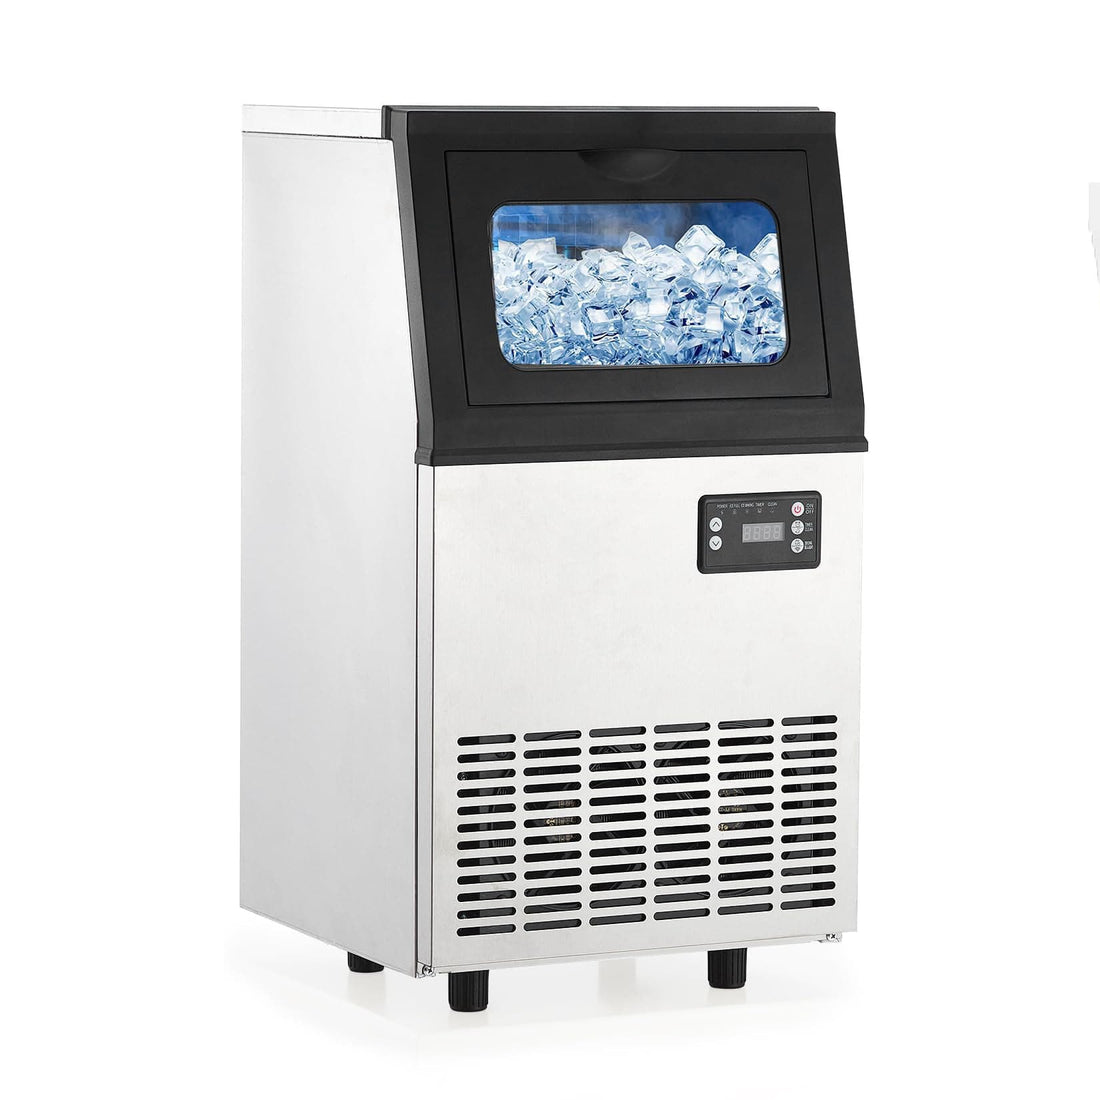 110Lbs/24H Ice Machine, 18Lbs Bin, Filter, for Home/Bar Use - GARVEE